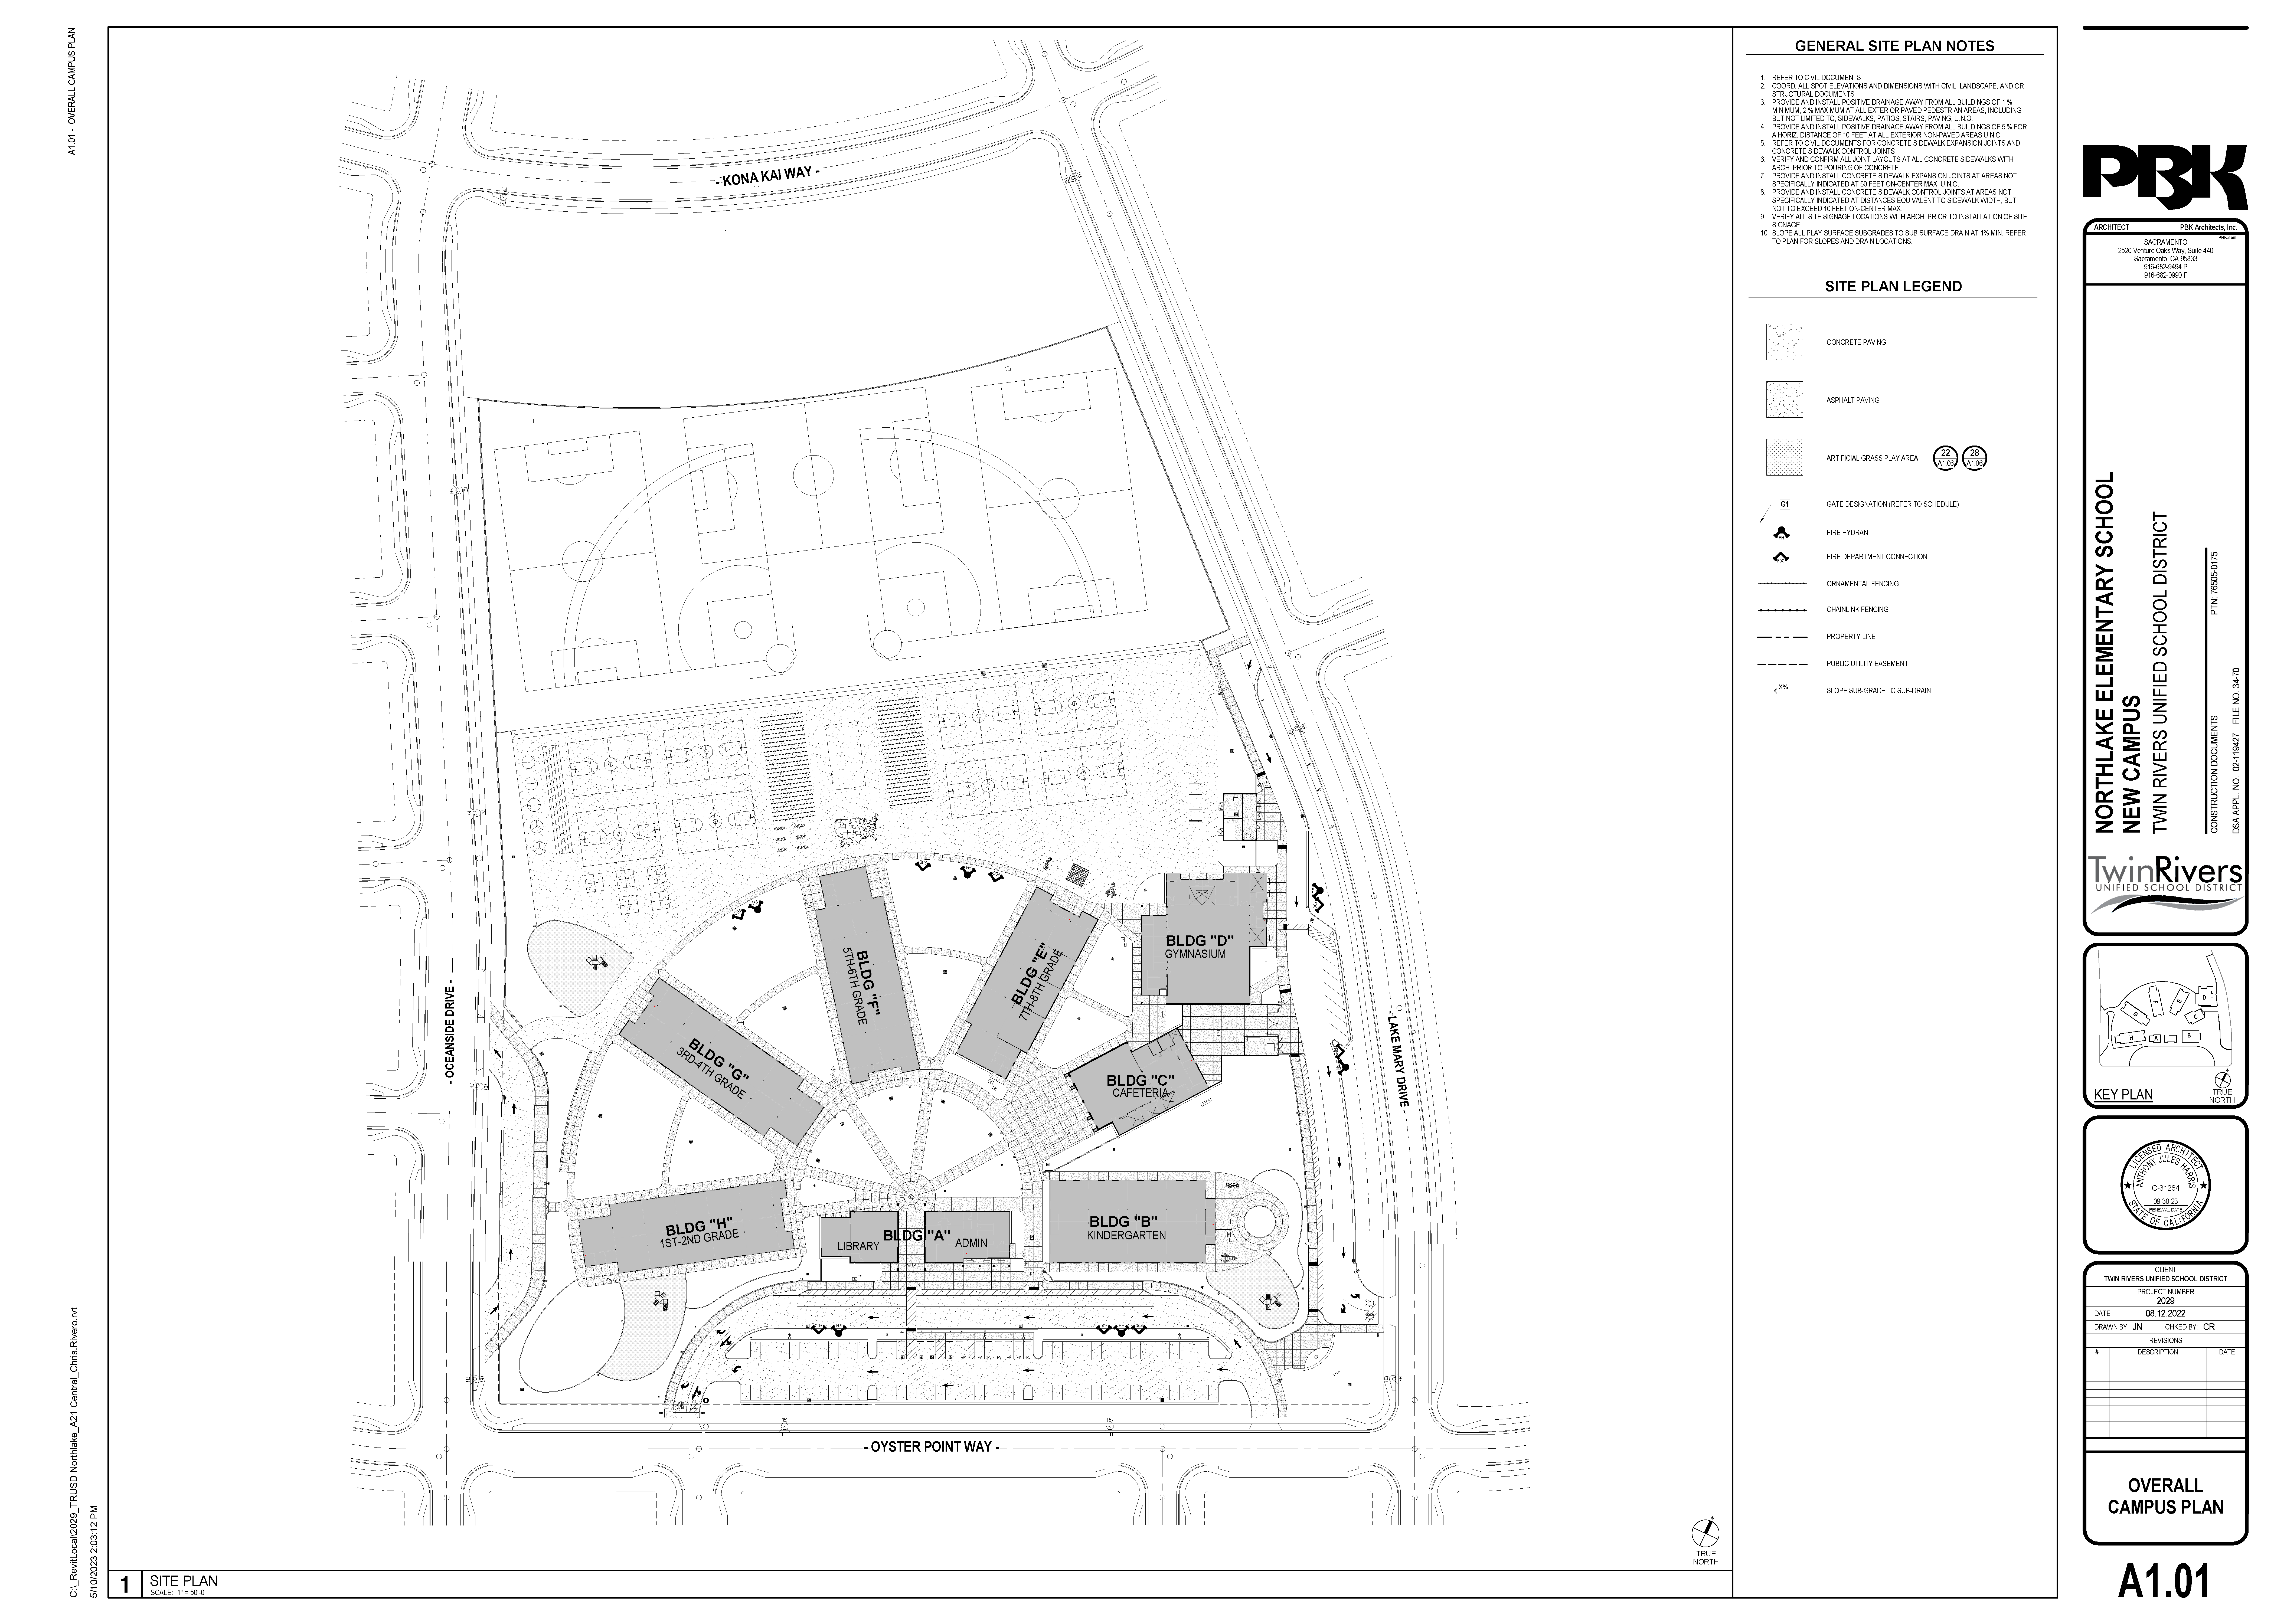 campus plan of Northlake TK-8 school